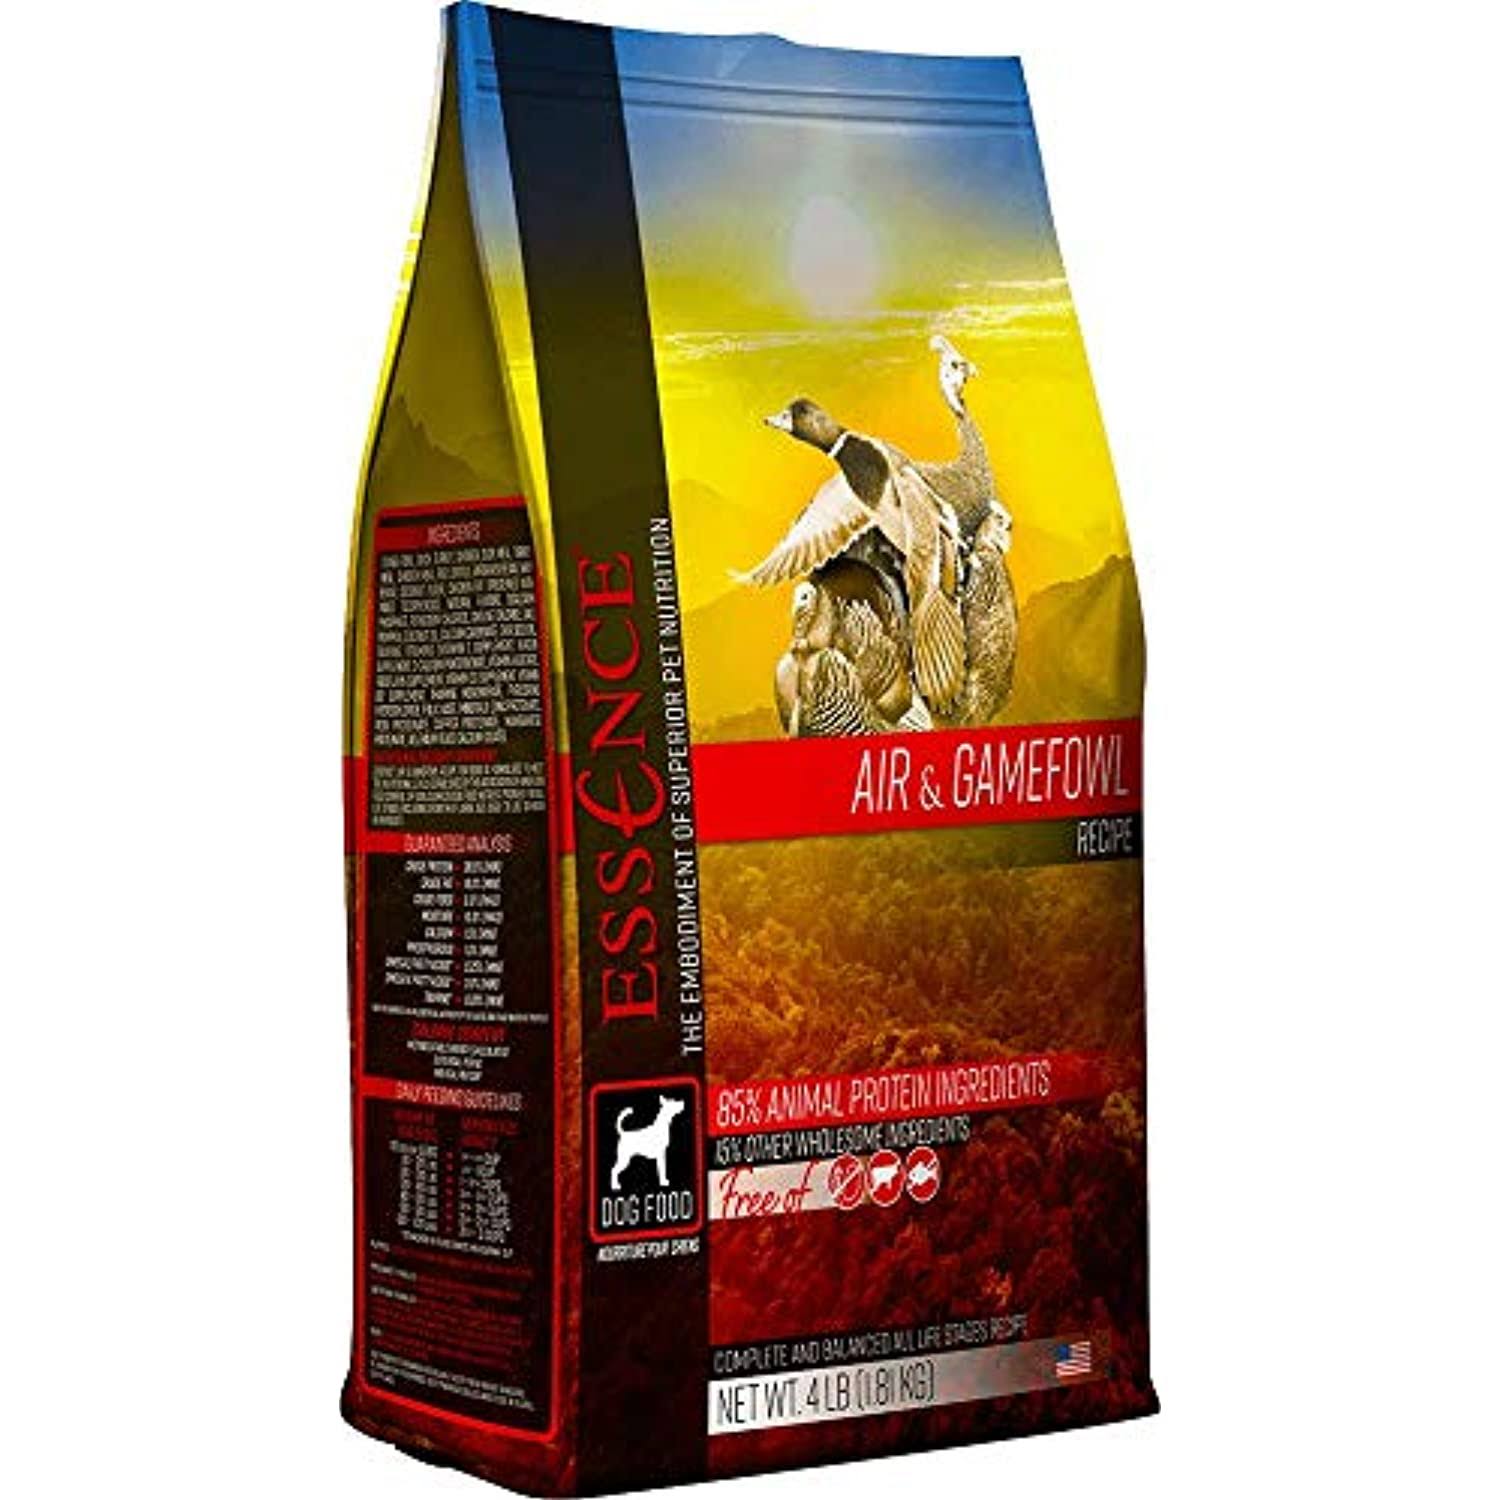 Essence Air Gamefowl Recipe Dog Dry Food 12.5 lbs